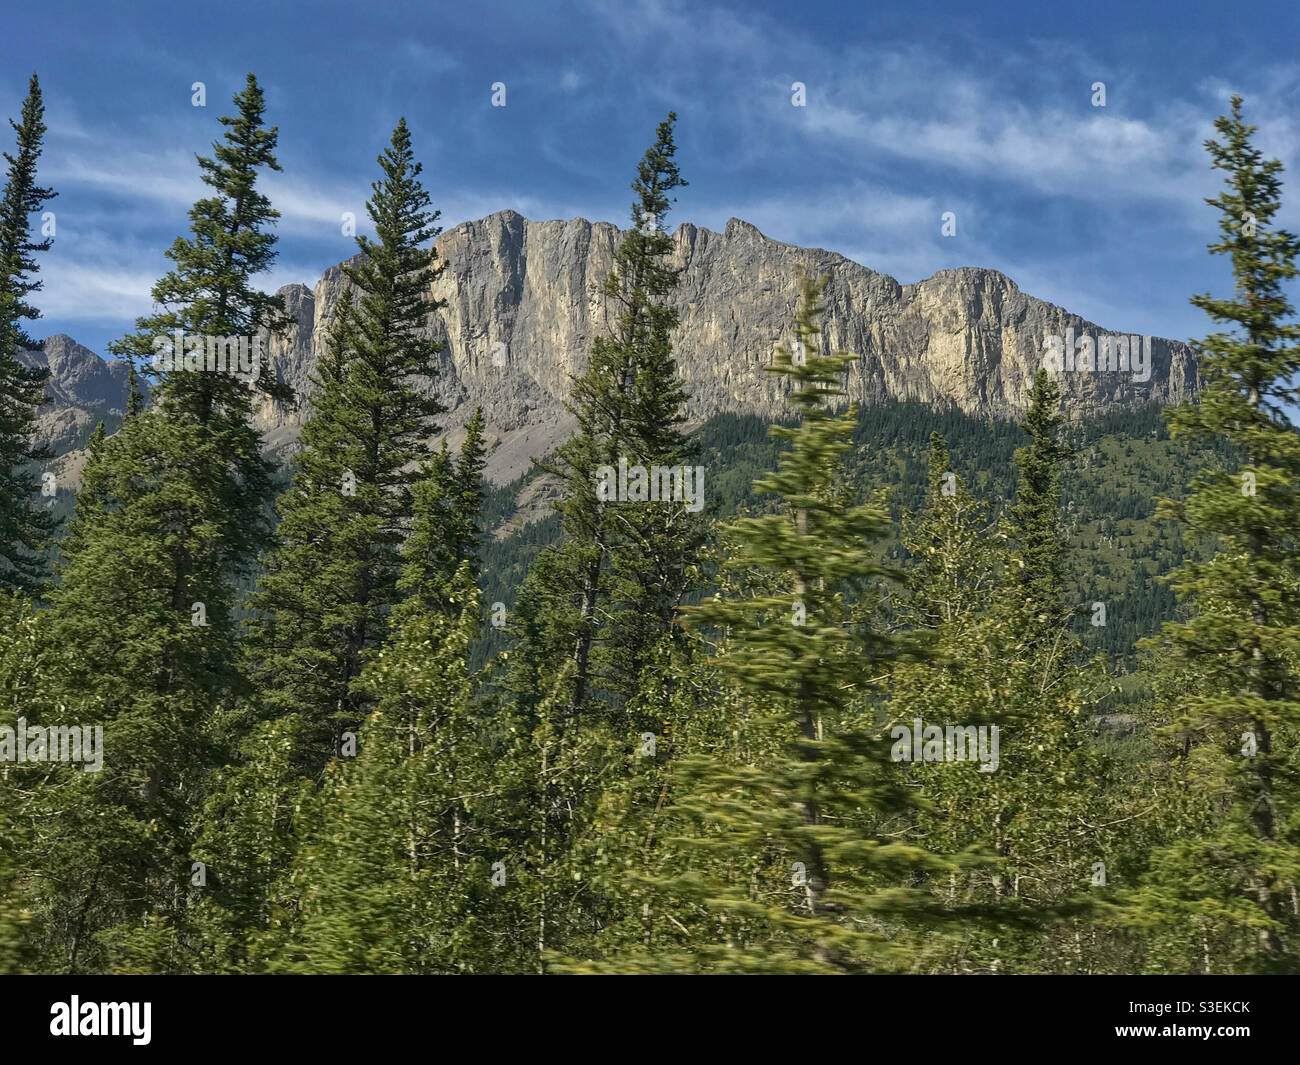 Mt. Yamnuska dans les Rocheuses canadiennes. Kananaskis, Alberta, Canada. Banque D'Images